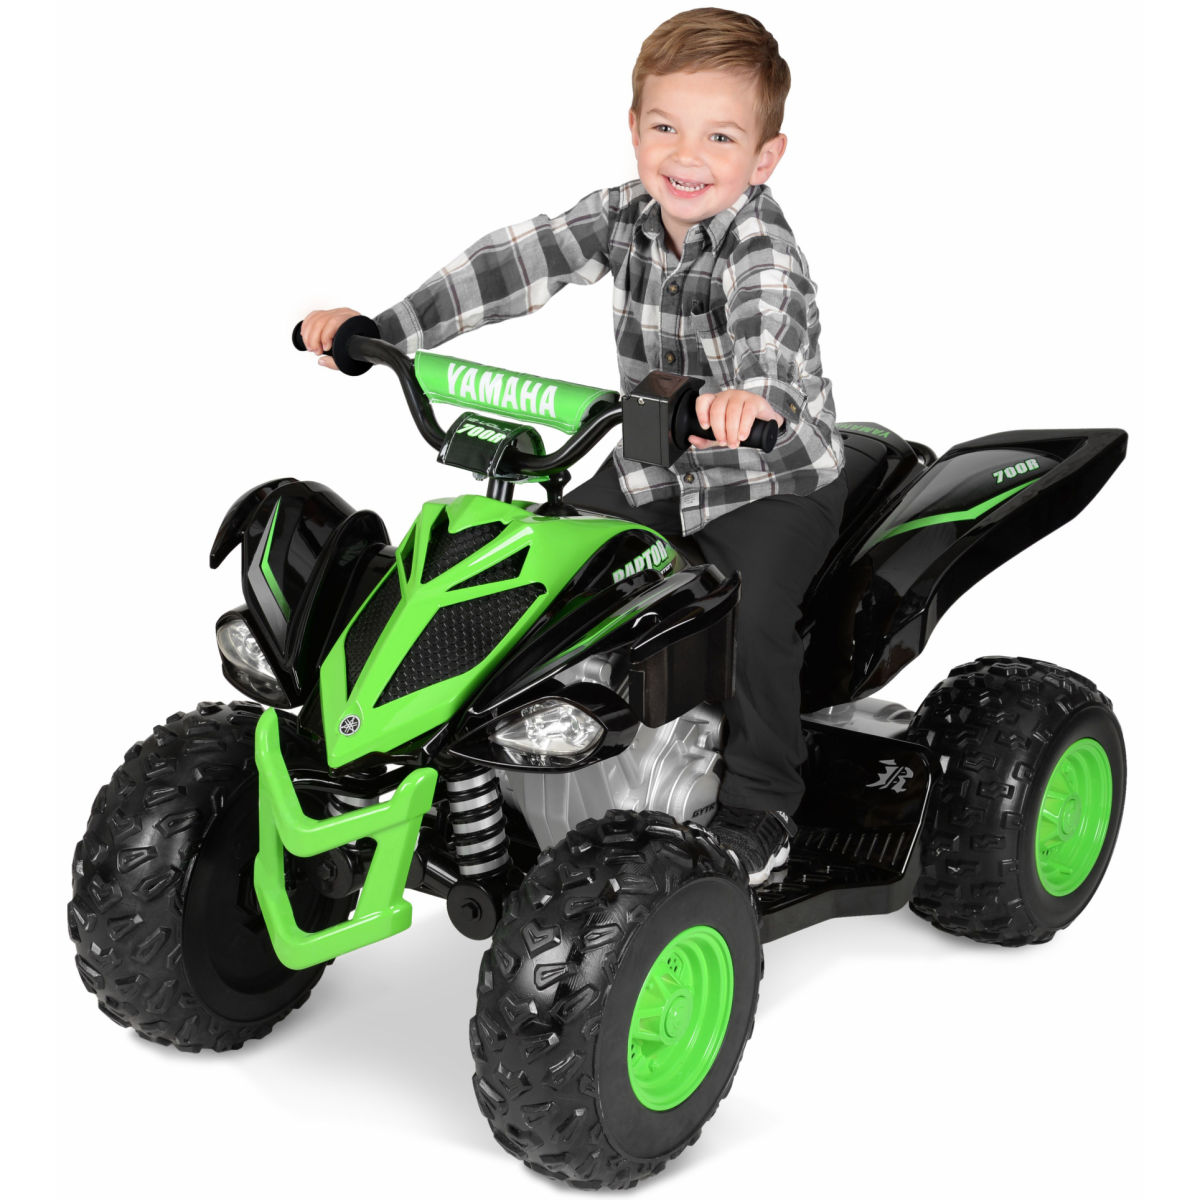 Yamaha Raptor 12V Battery Powered Ride-on ATV Toy